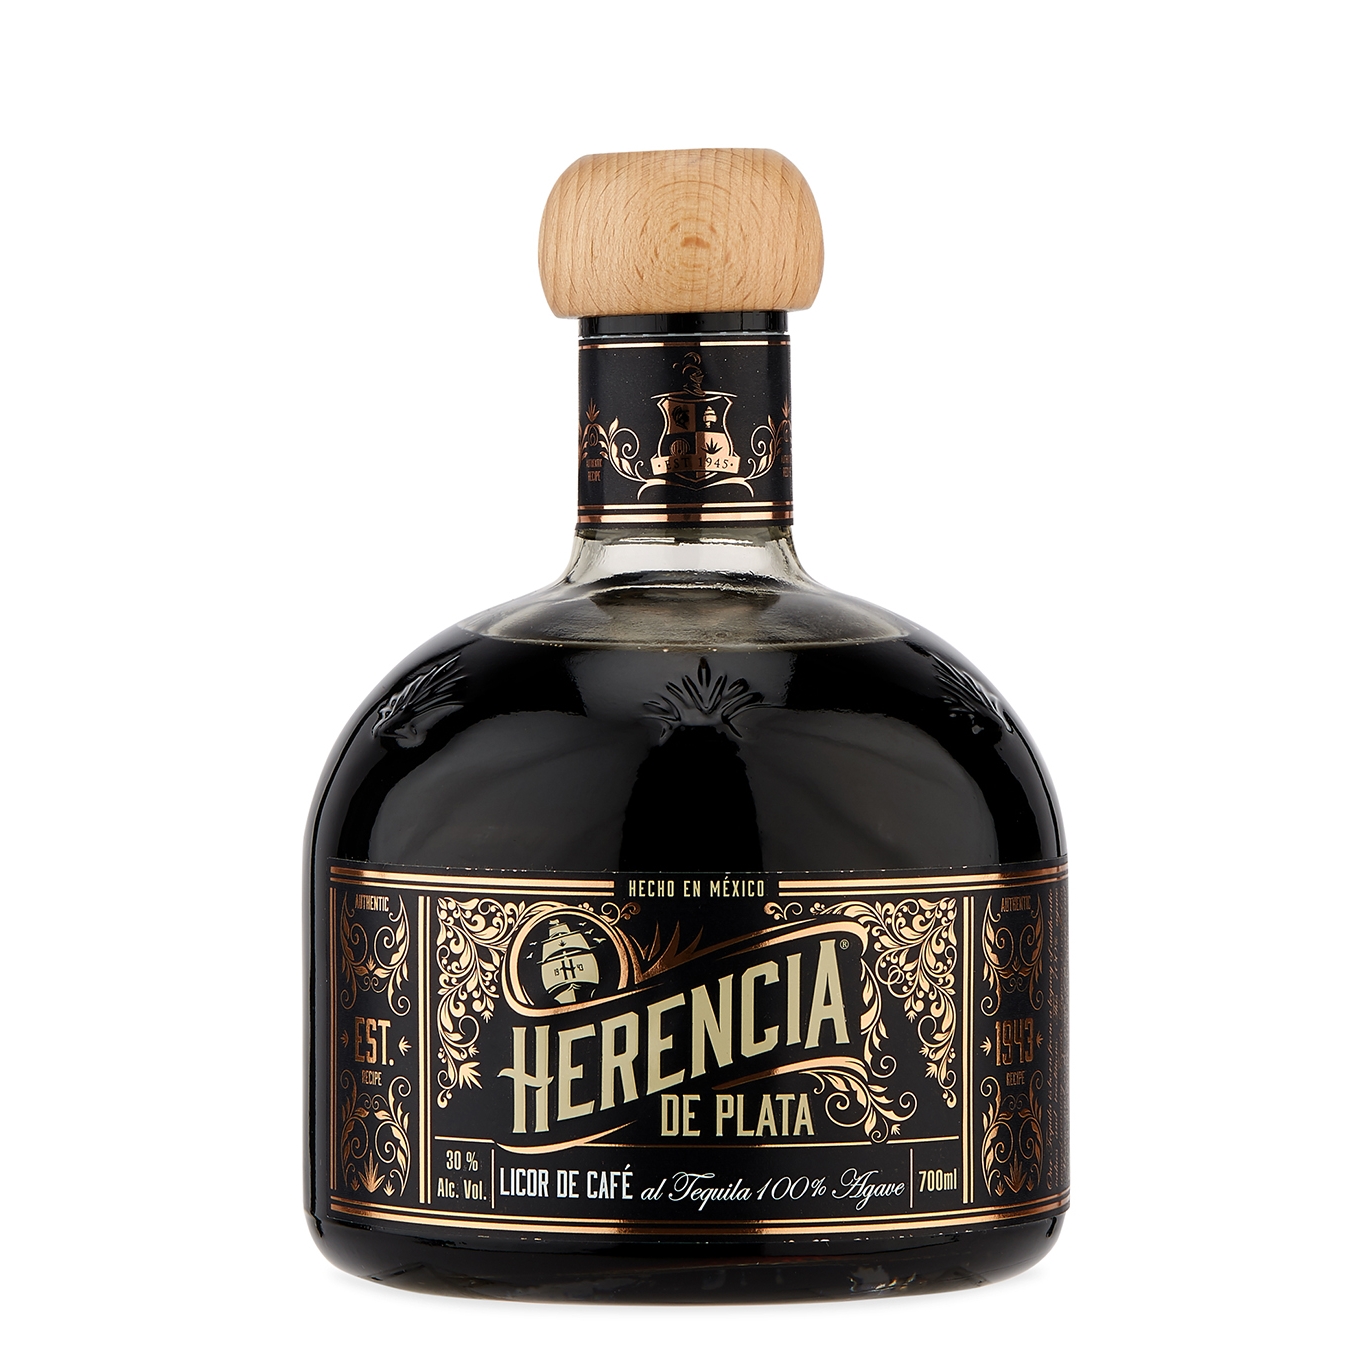 Herencia de Plata Coffee Liqueur, Mexico, ABV 30%, 700ml